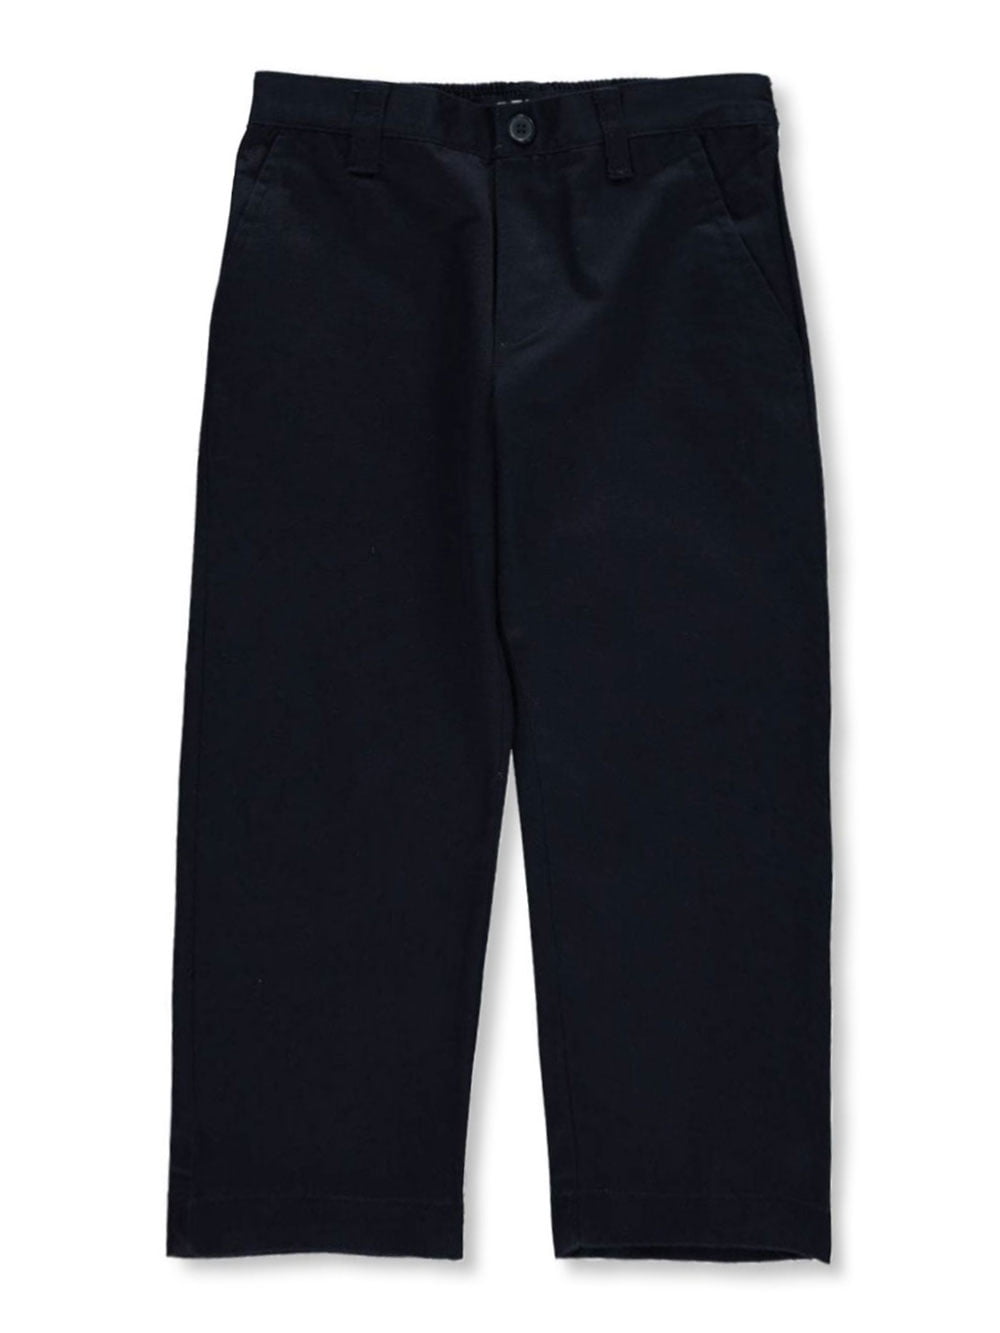 unik Boy's Black Uniform All Elastic Waist Pull-on Pants 4-12 – unik Retail